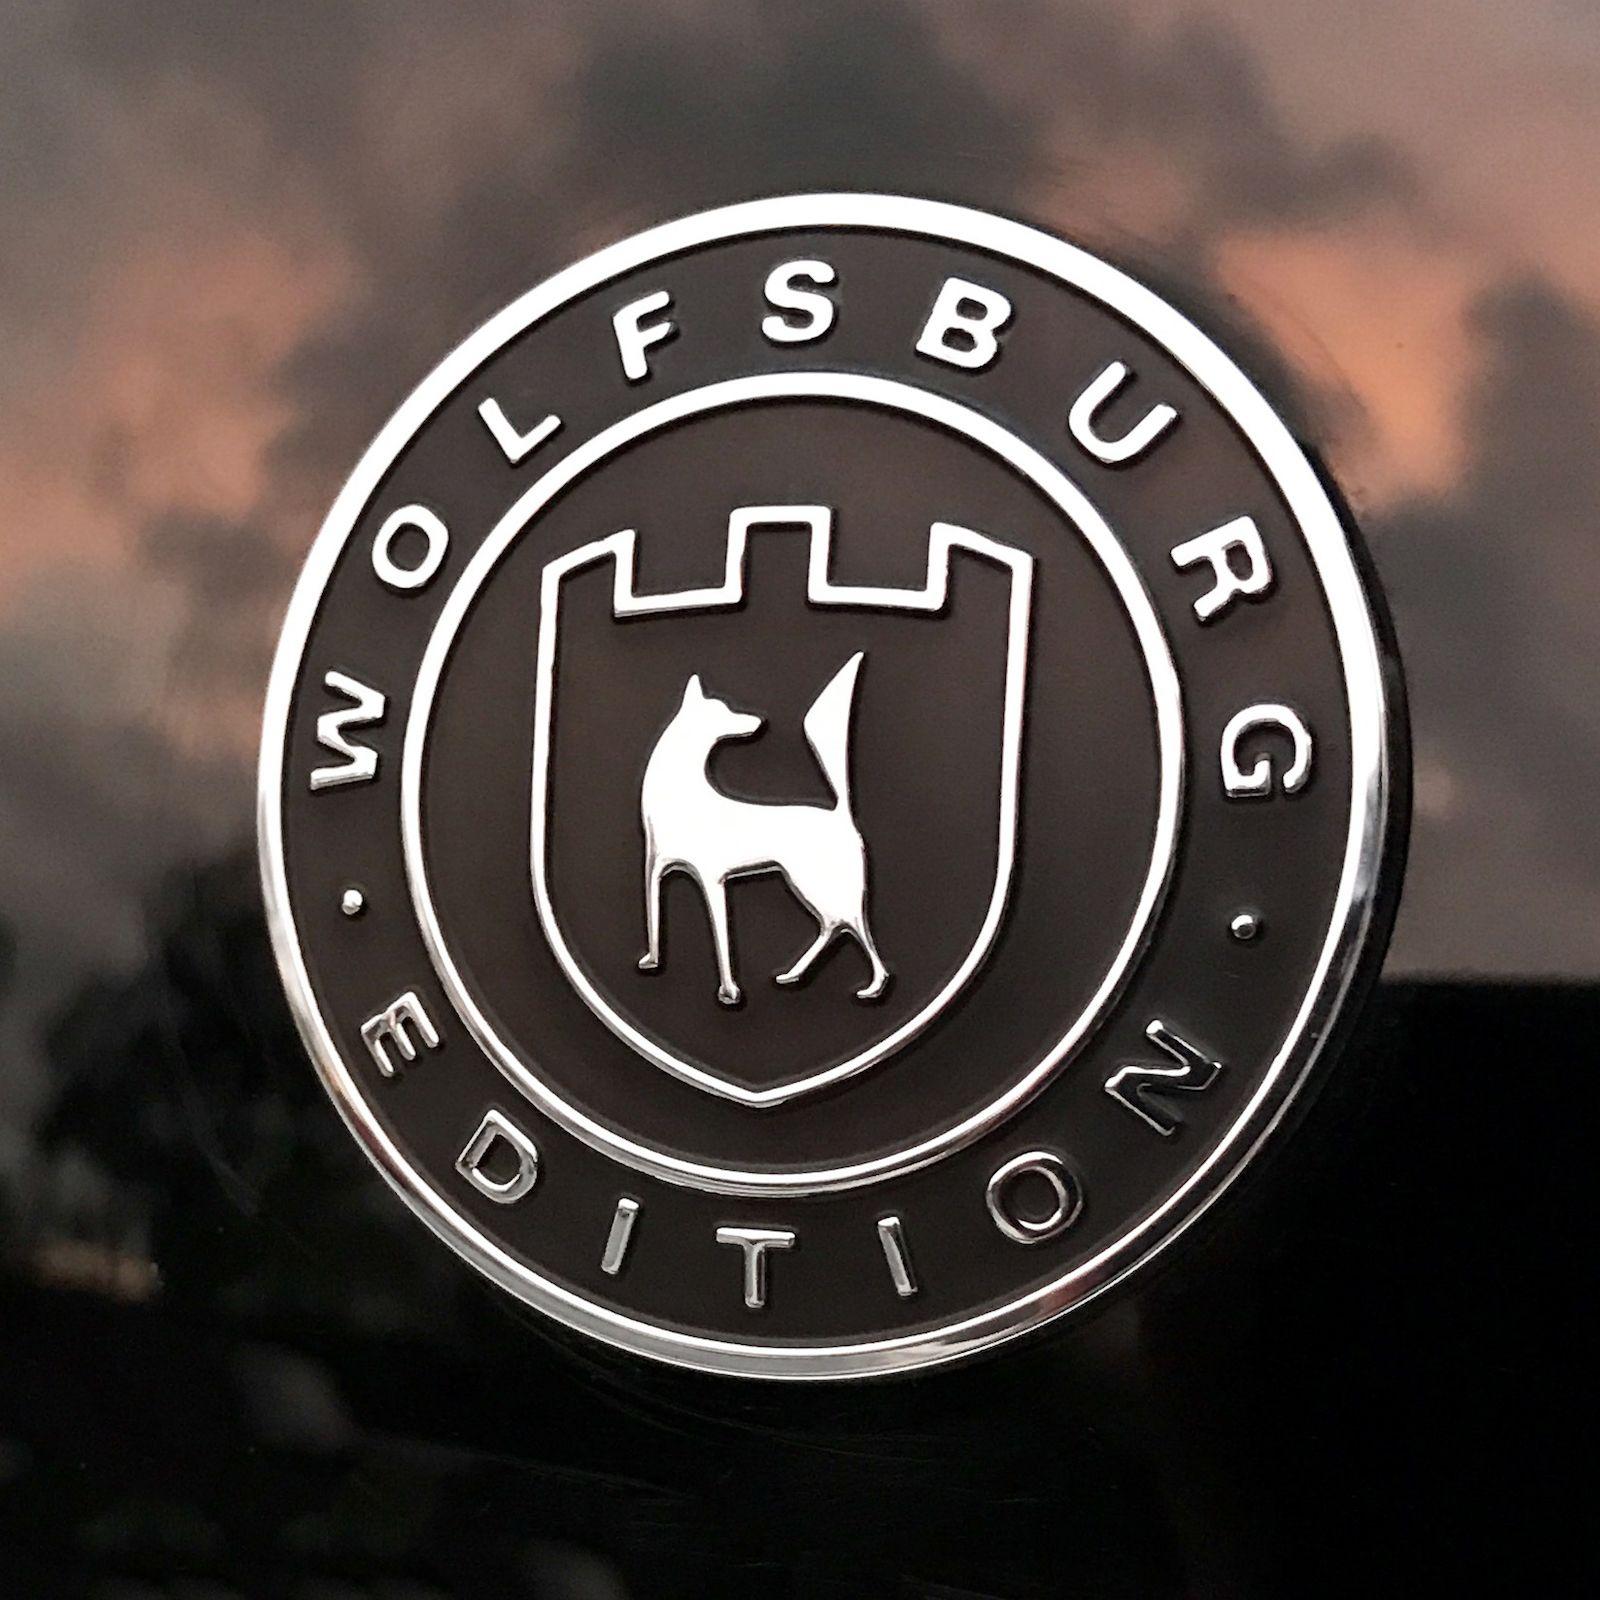 Wolfsburg Edition Logo - Duke's Drive: 2017 VW Touareg V6 Wolfsburg Edition Review - Chris Duke